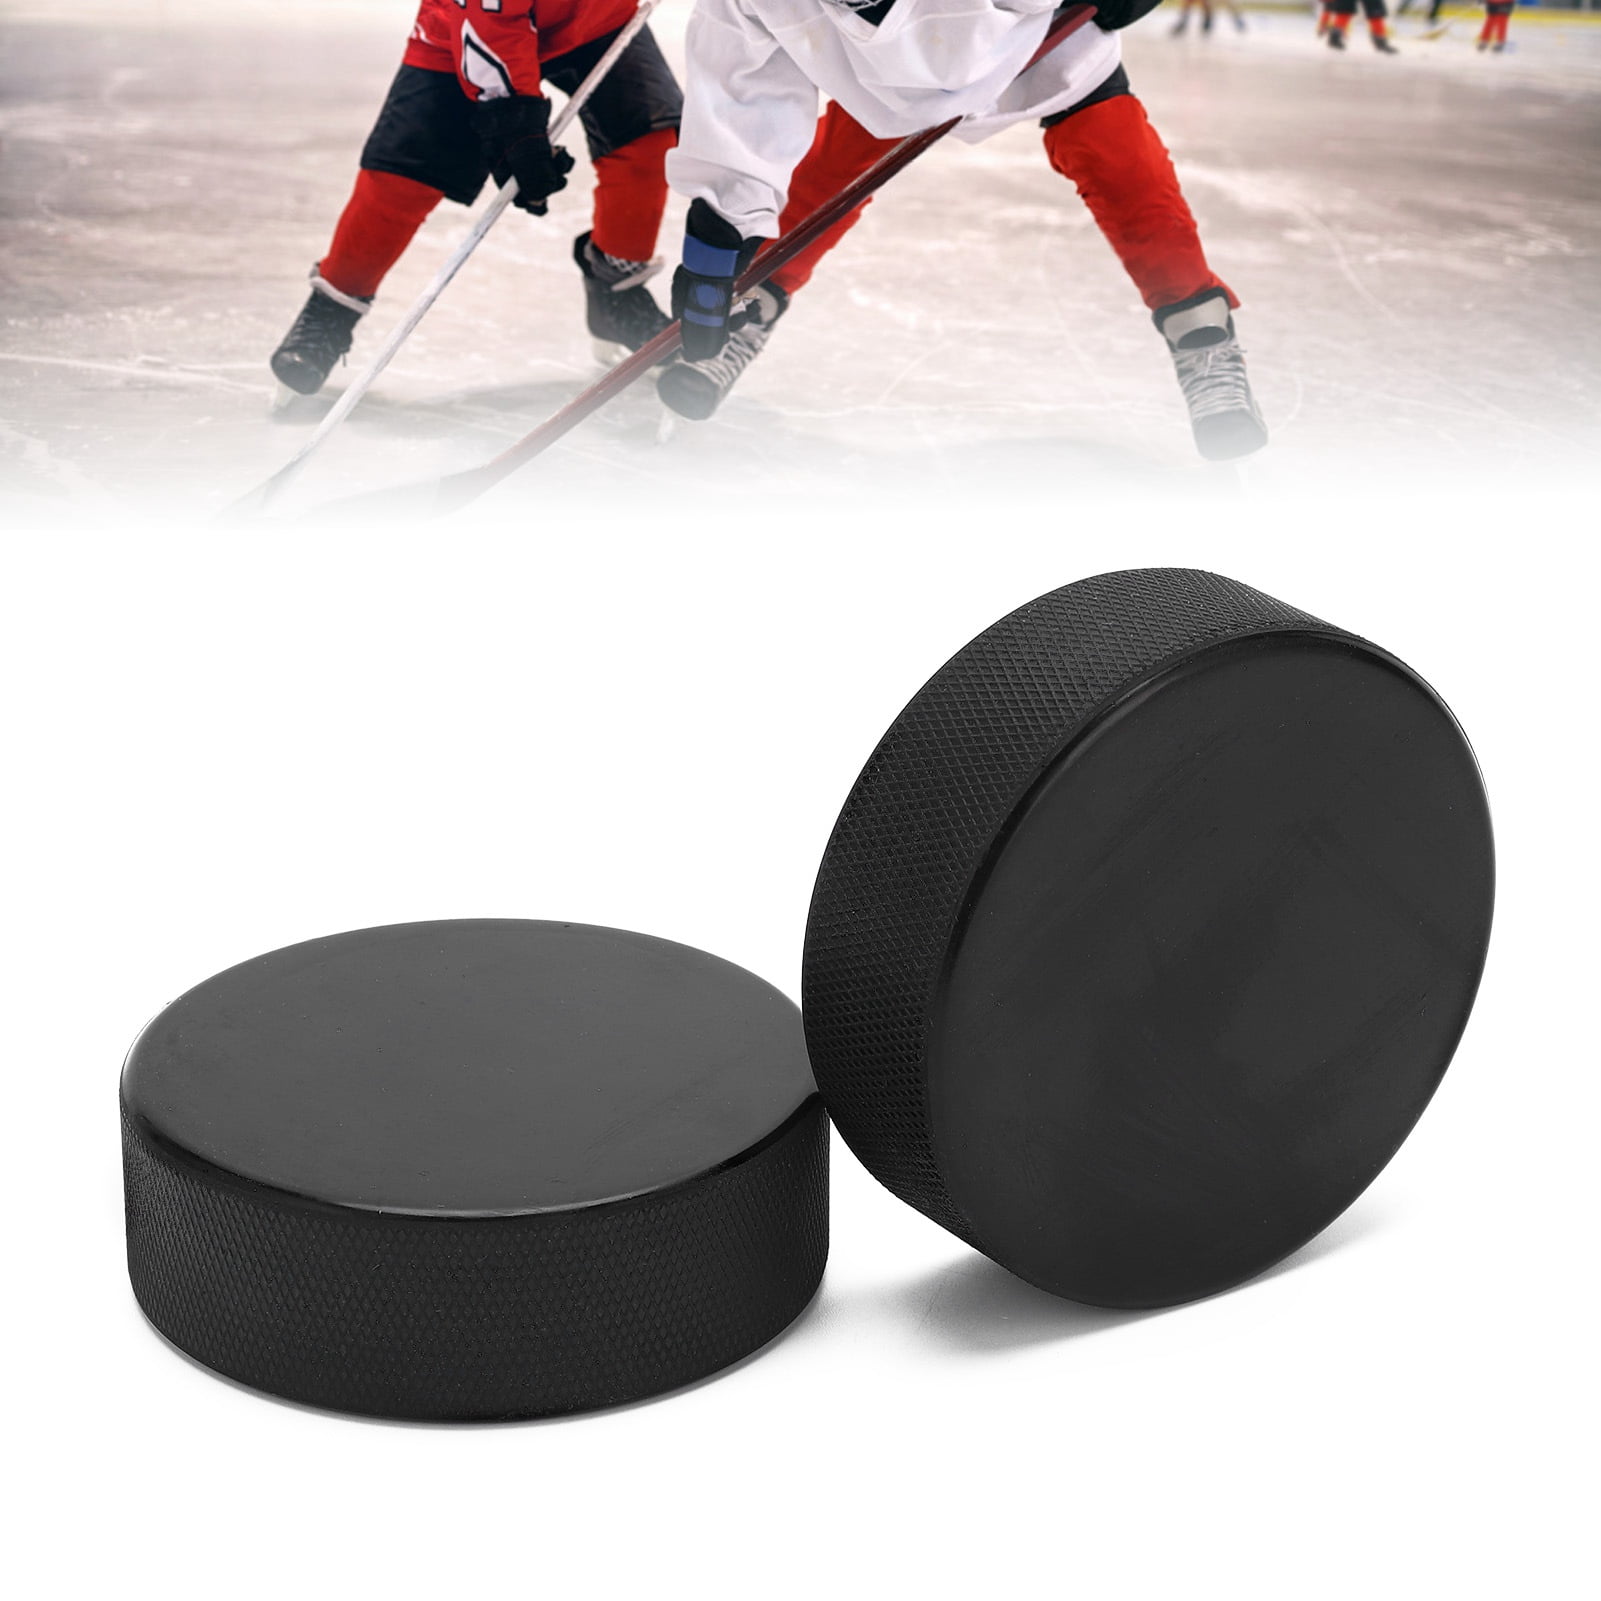 1 X Ice Hockey Pucks Rubber Orange Black Hockey Games Training Exercise Supplies 